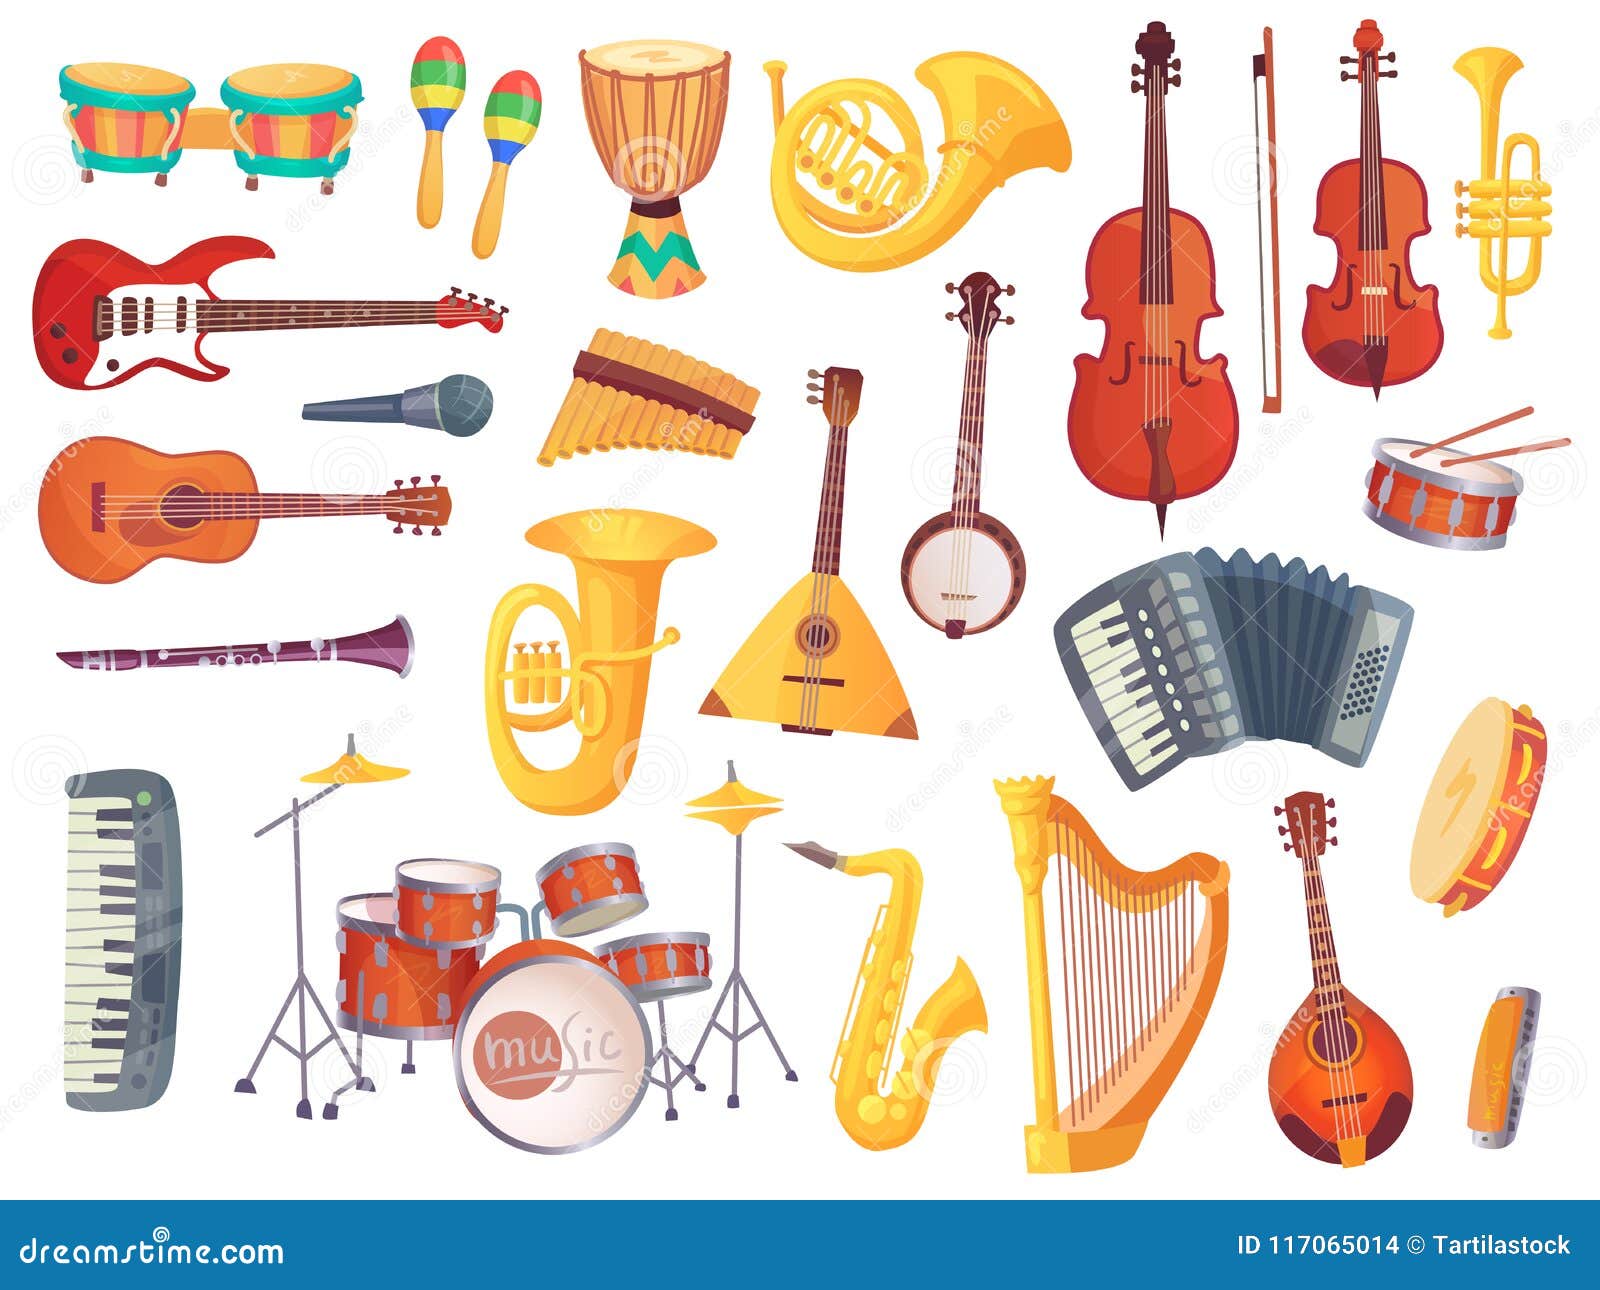 cartoon musical instruments, guitars, bongo drums, cello, saxophone, microphone, drum kit . music instrument